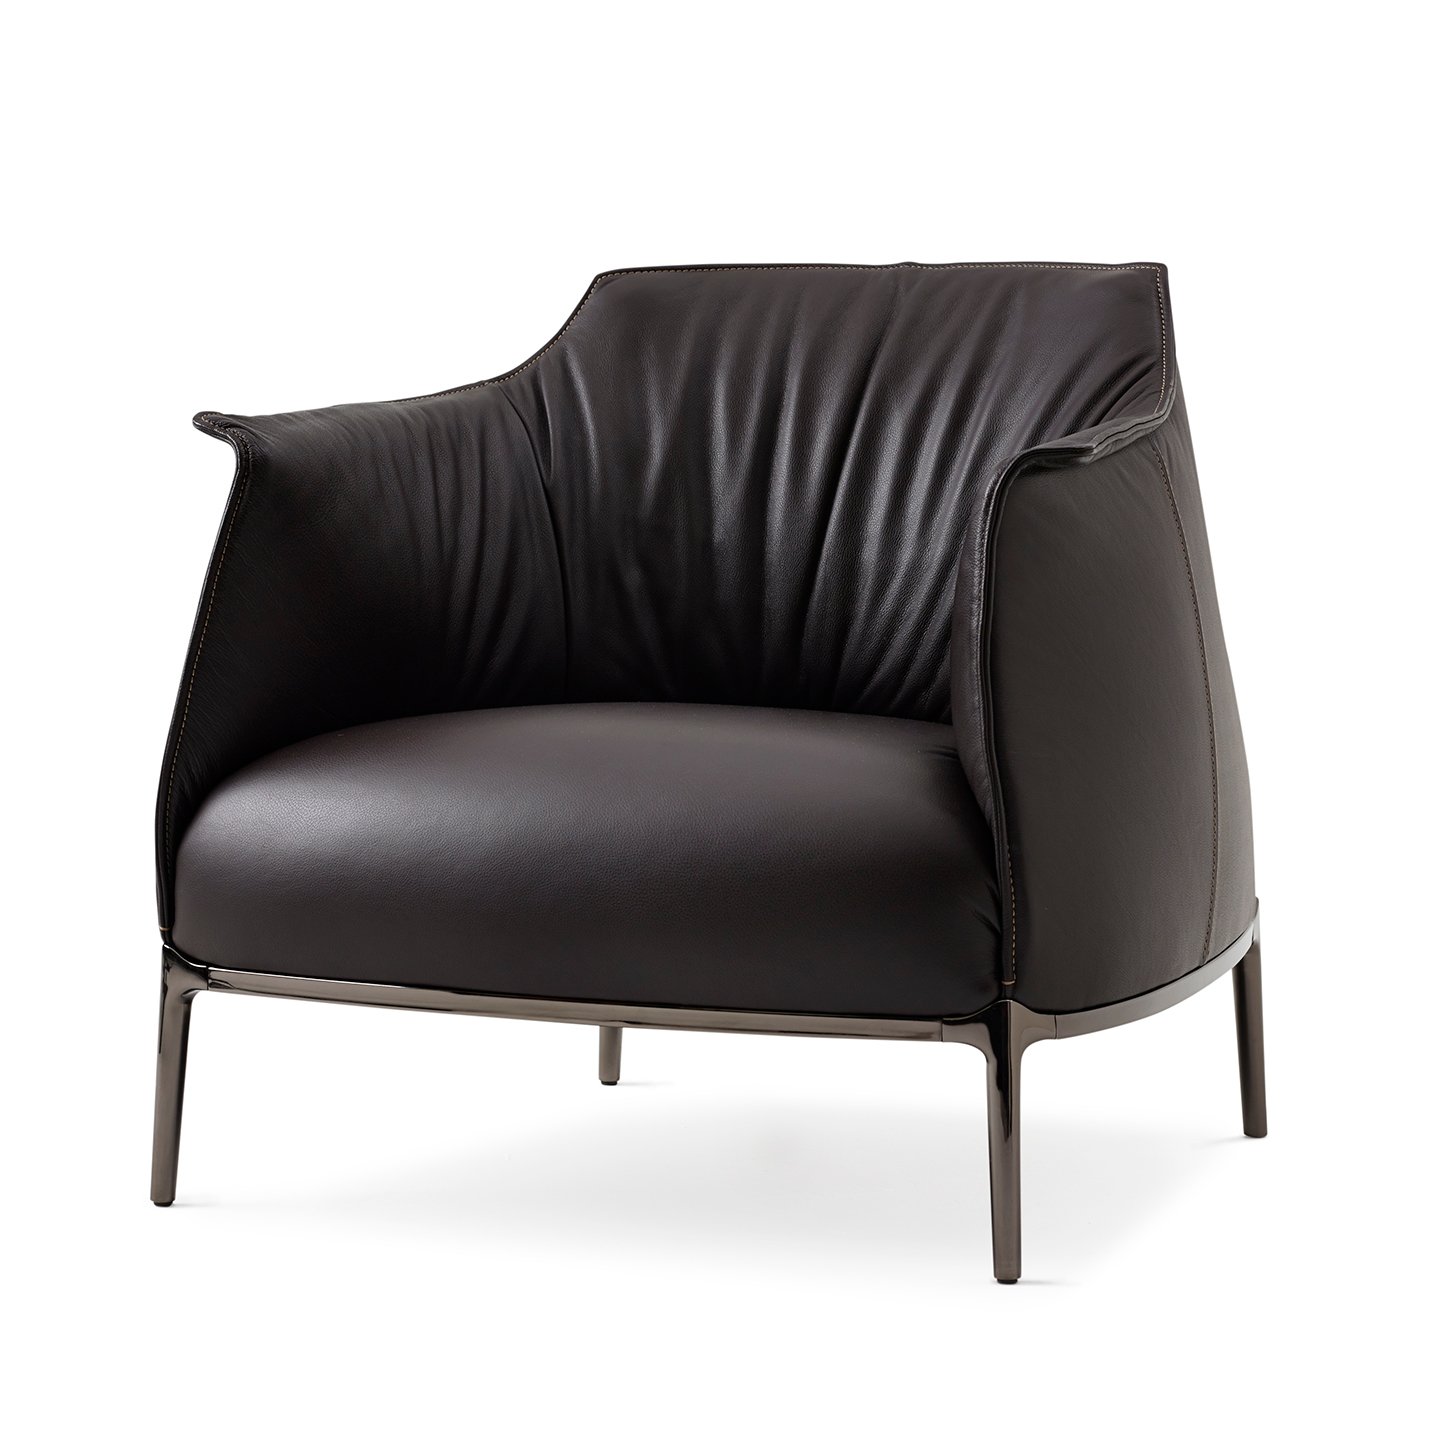 Haworth Archibald lounge chair in dark brown leather.